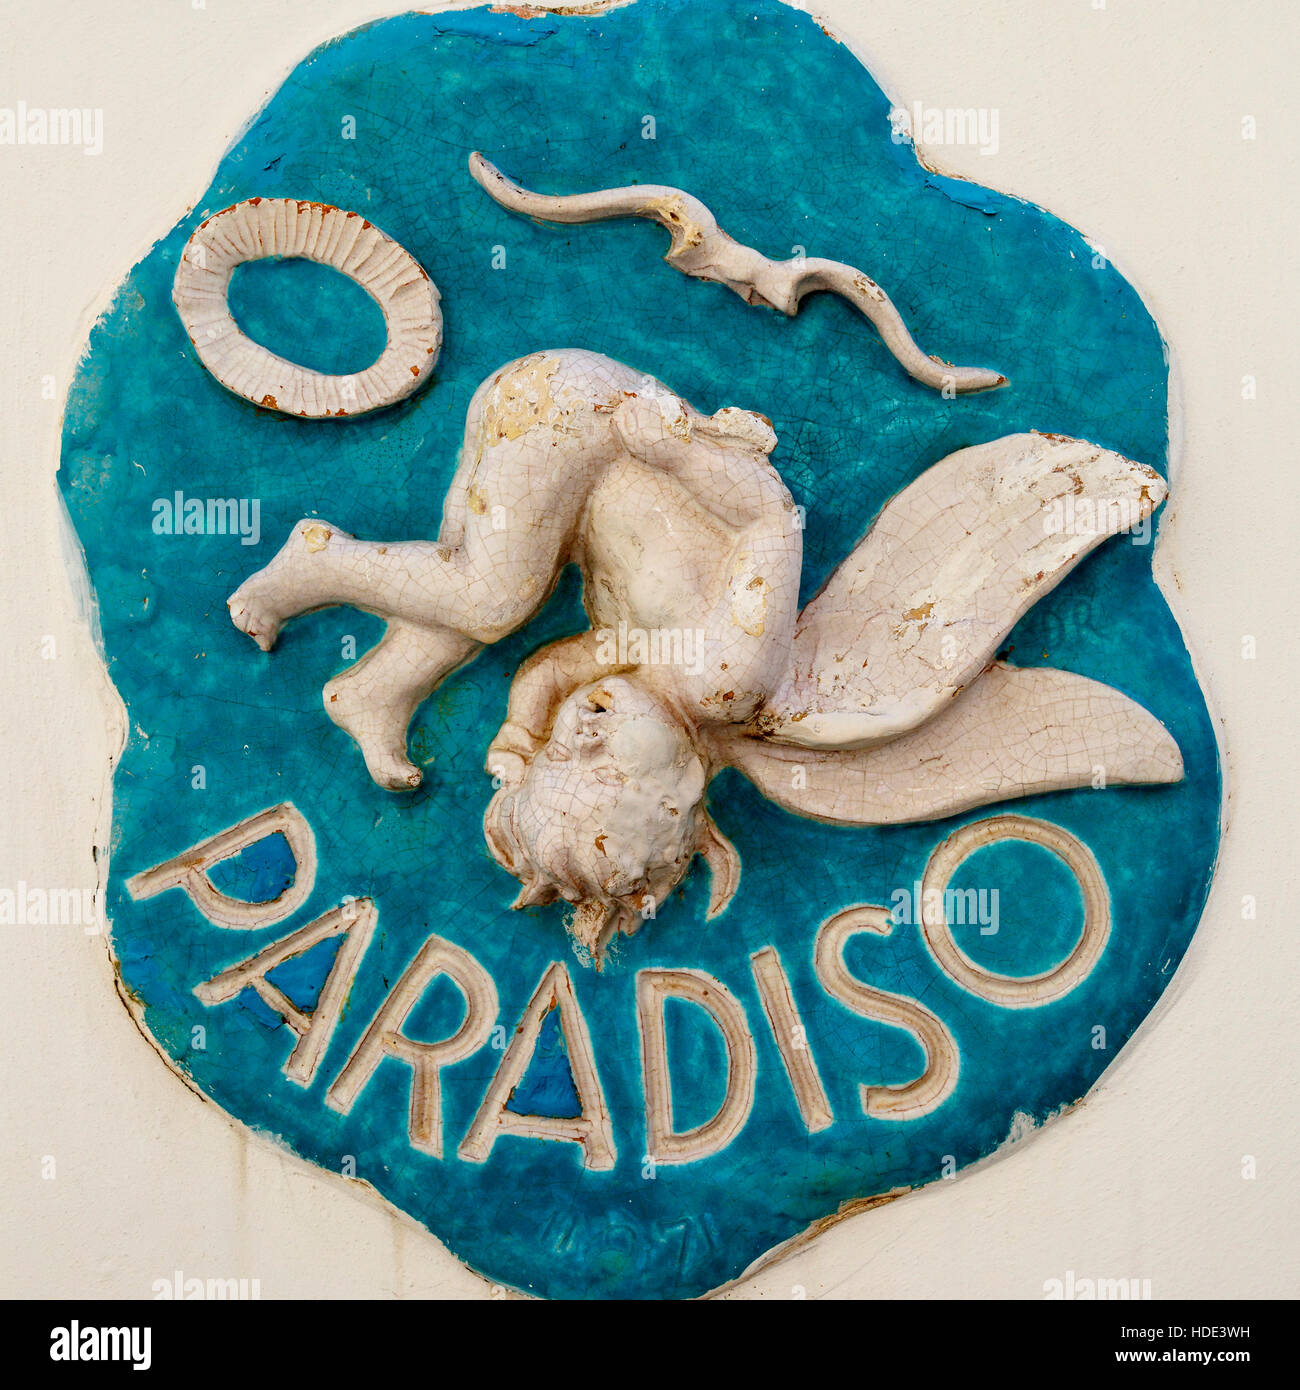 Plaque showing a fallen cherub and the house name Paradiso, Ravello, Italy Stock Photo